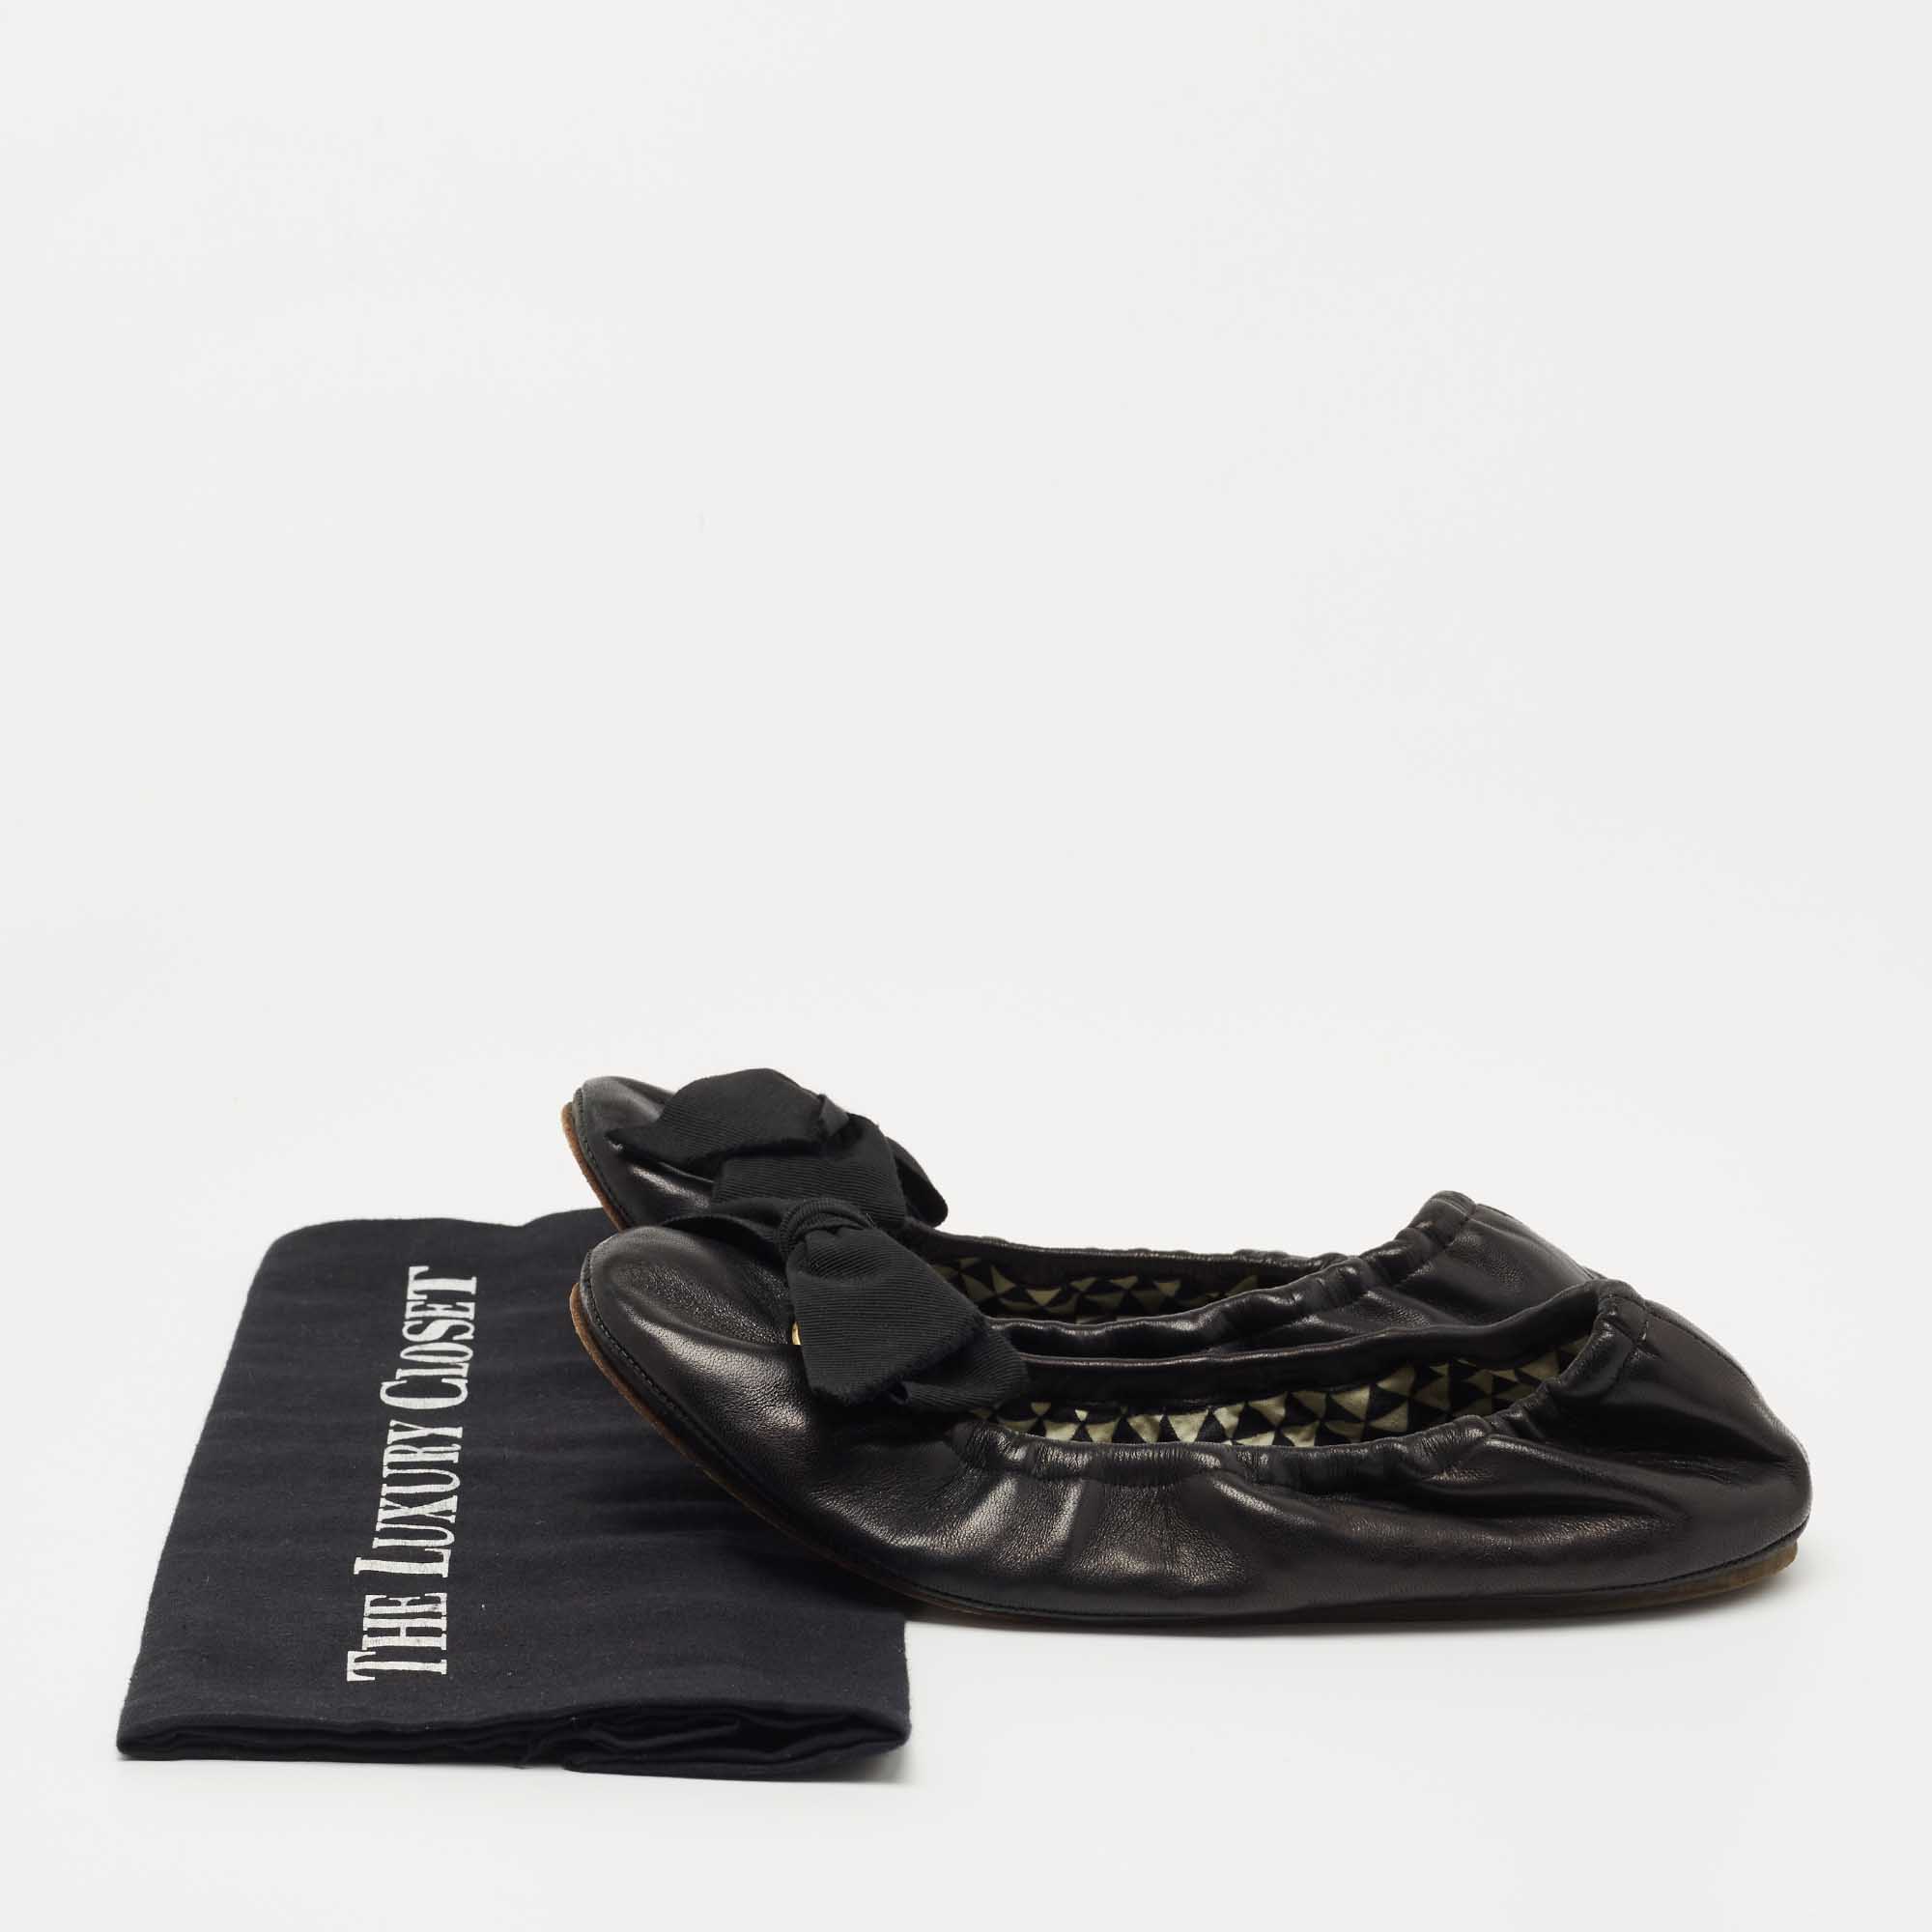 Isabel Marant Black Leather Bow Ballet Flats Size 40